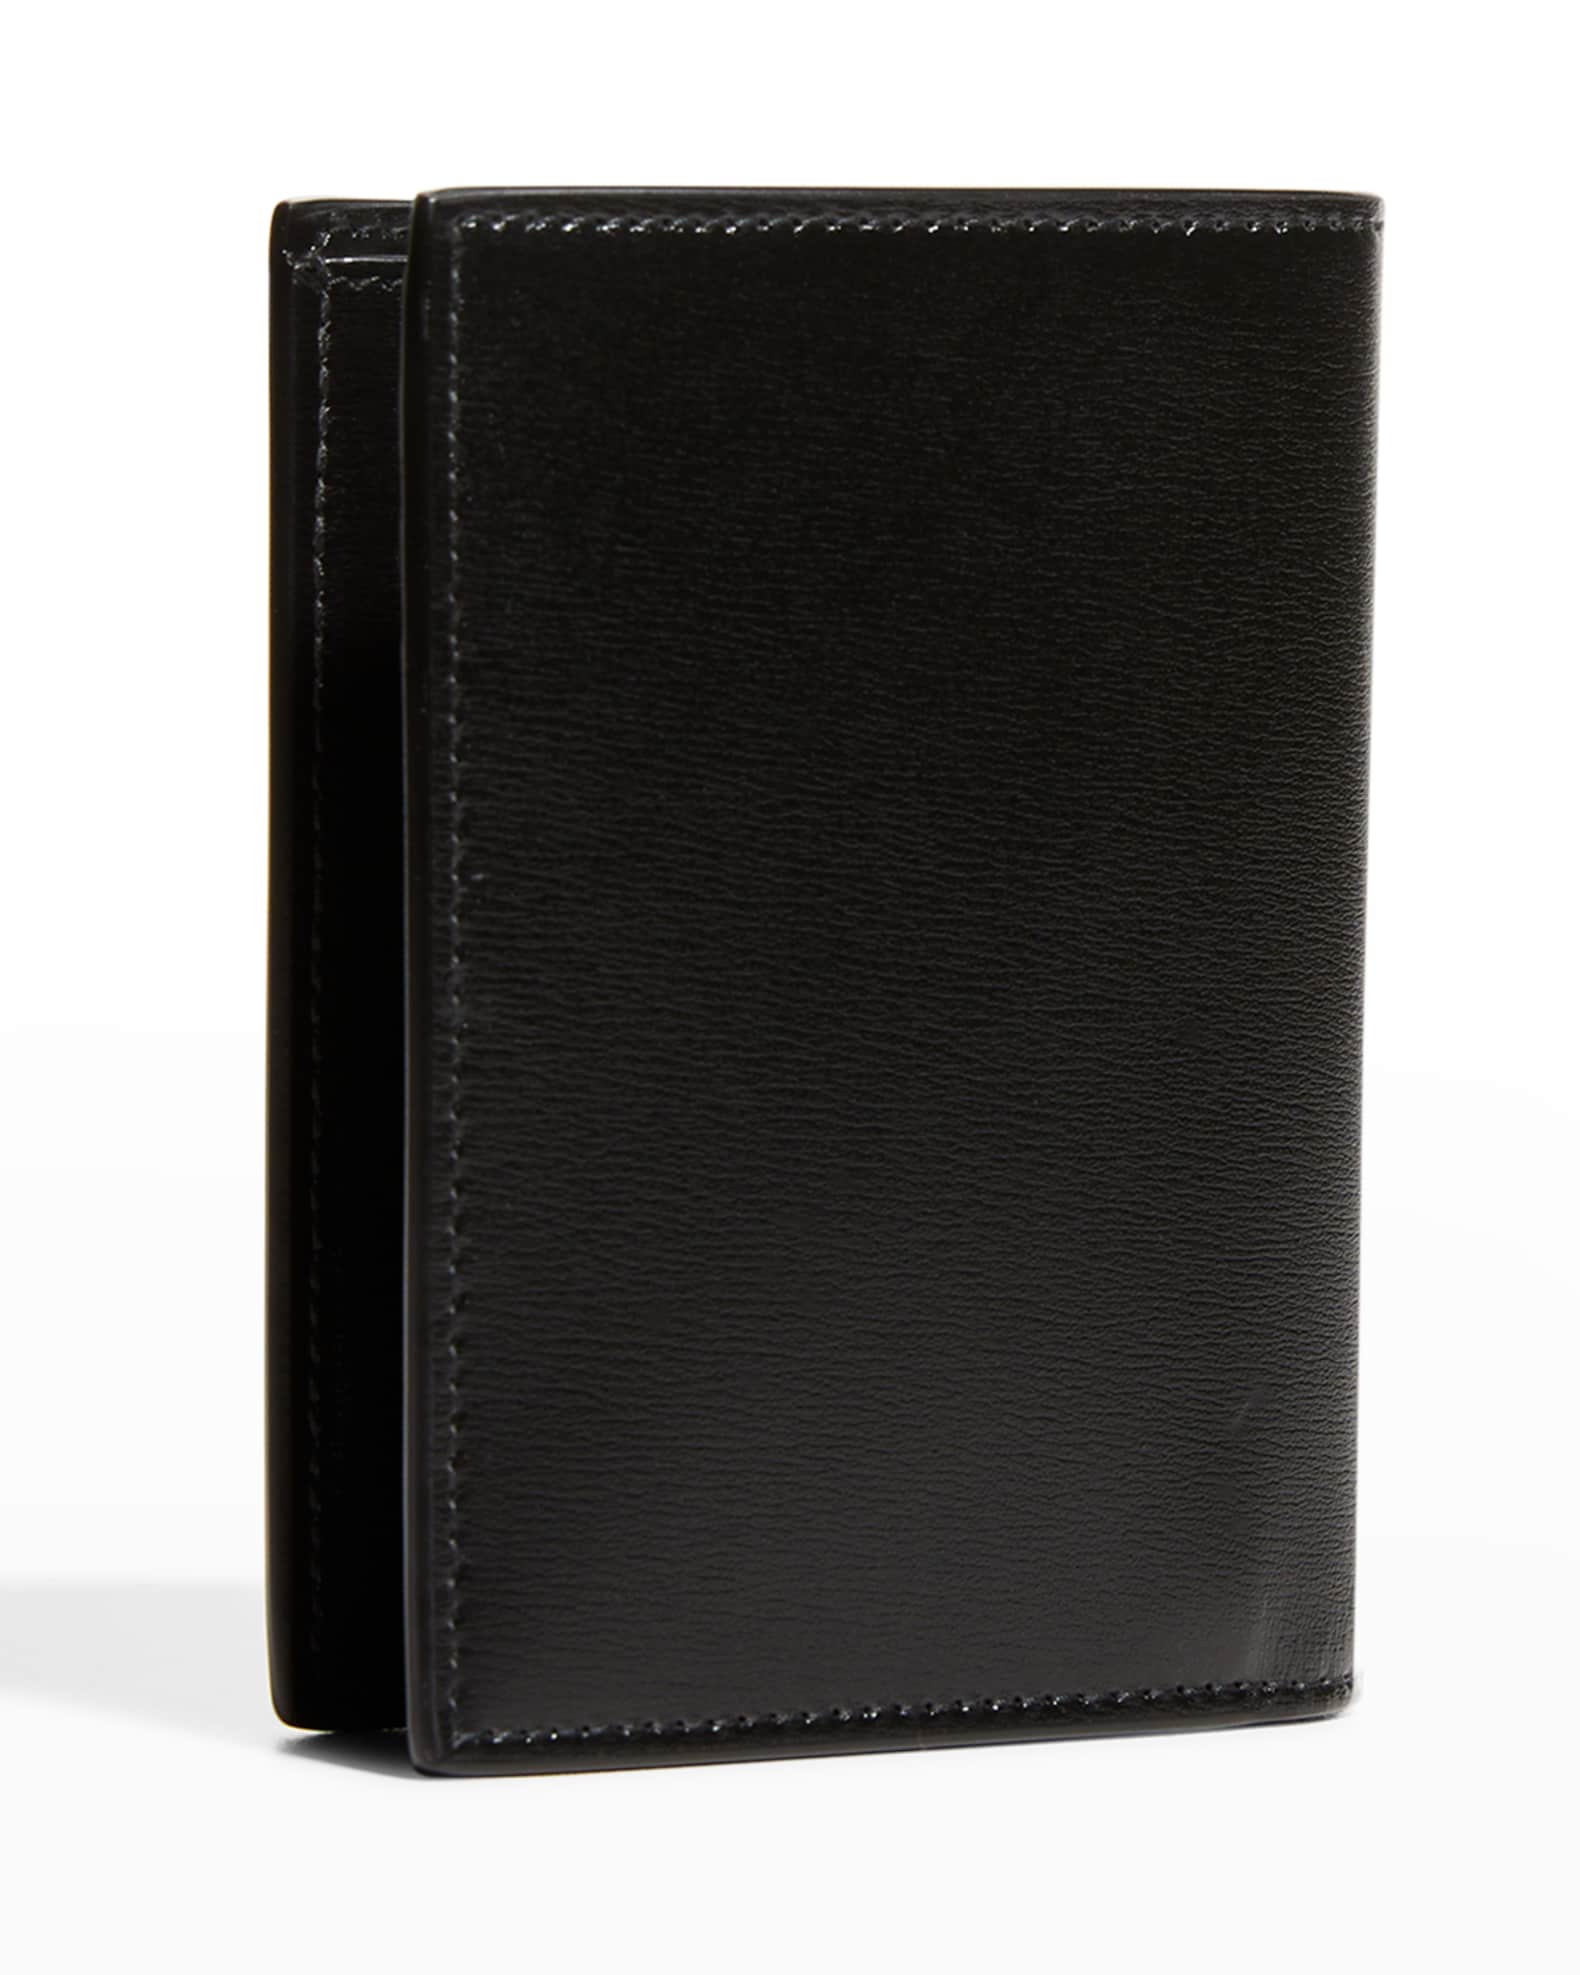 Saint Laurent Men's YSL Leather Wallet | Neiman Marcus